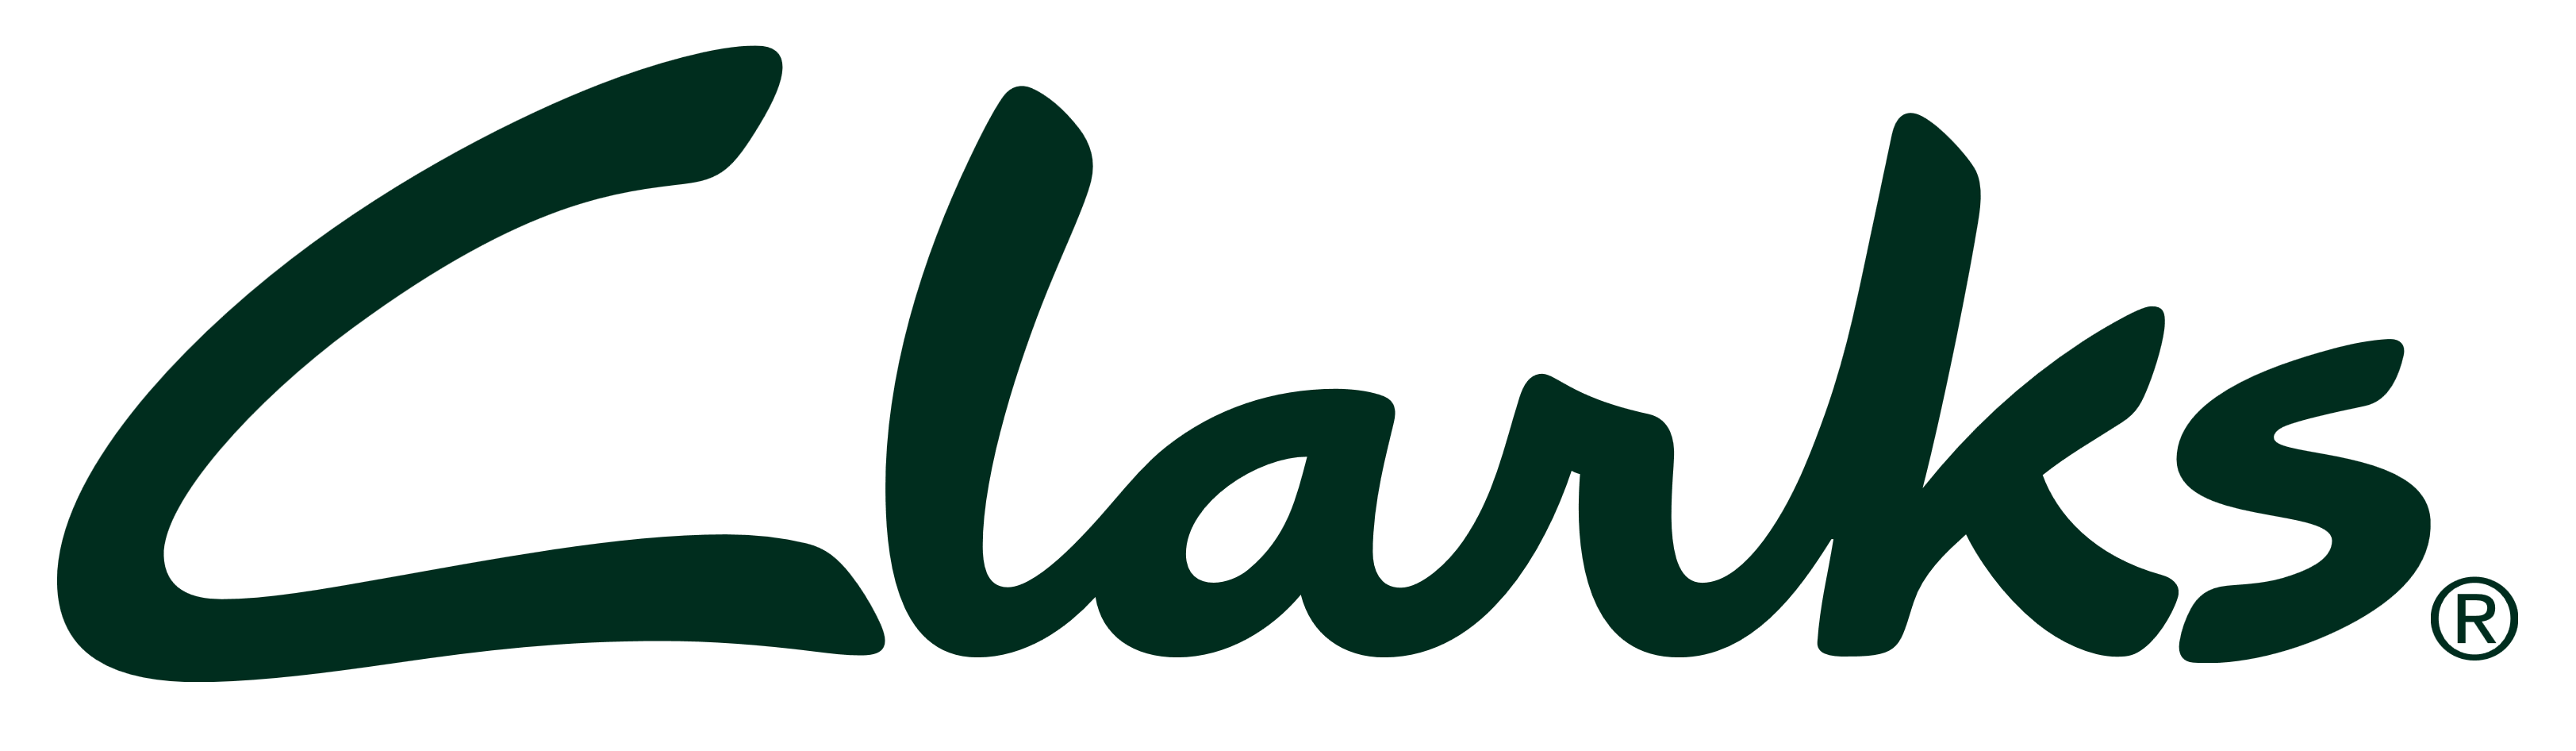 Clarks logo, logotype